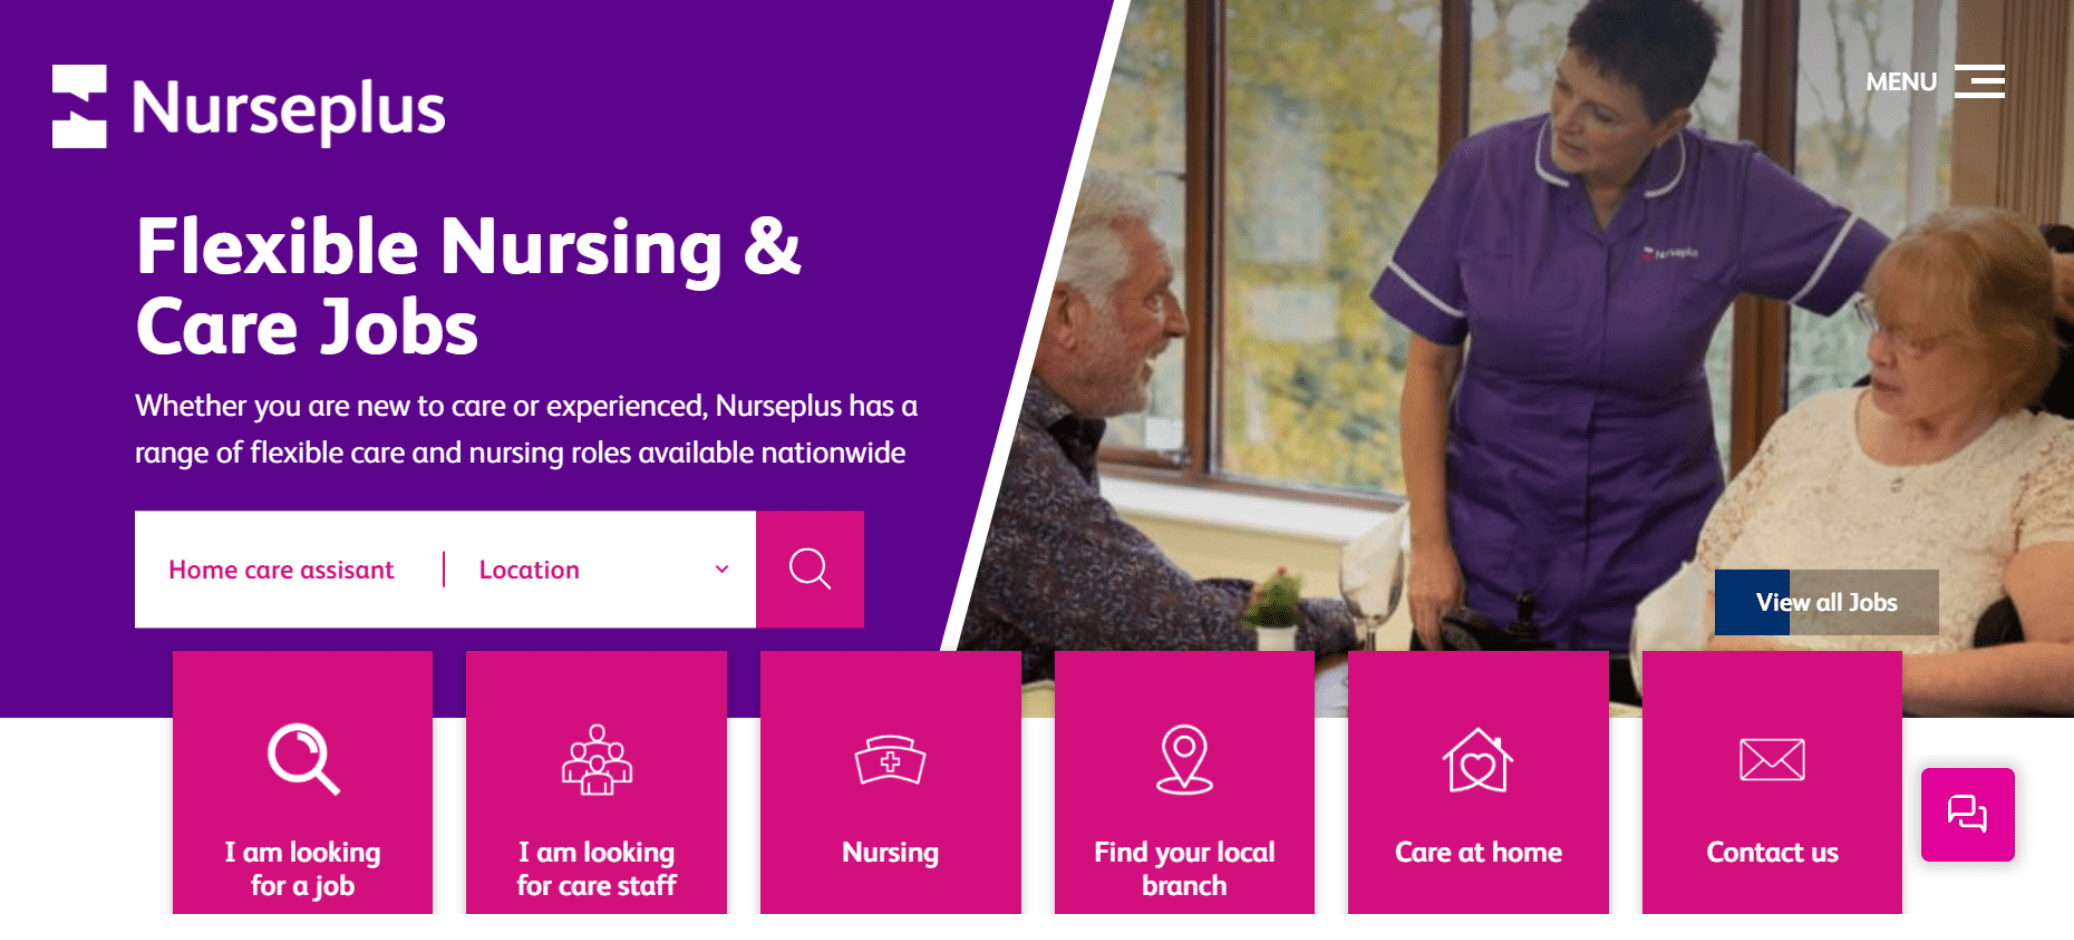 Nurseplus UK homepage in desktop view by Access Volcanic